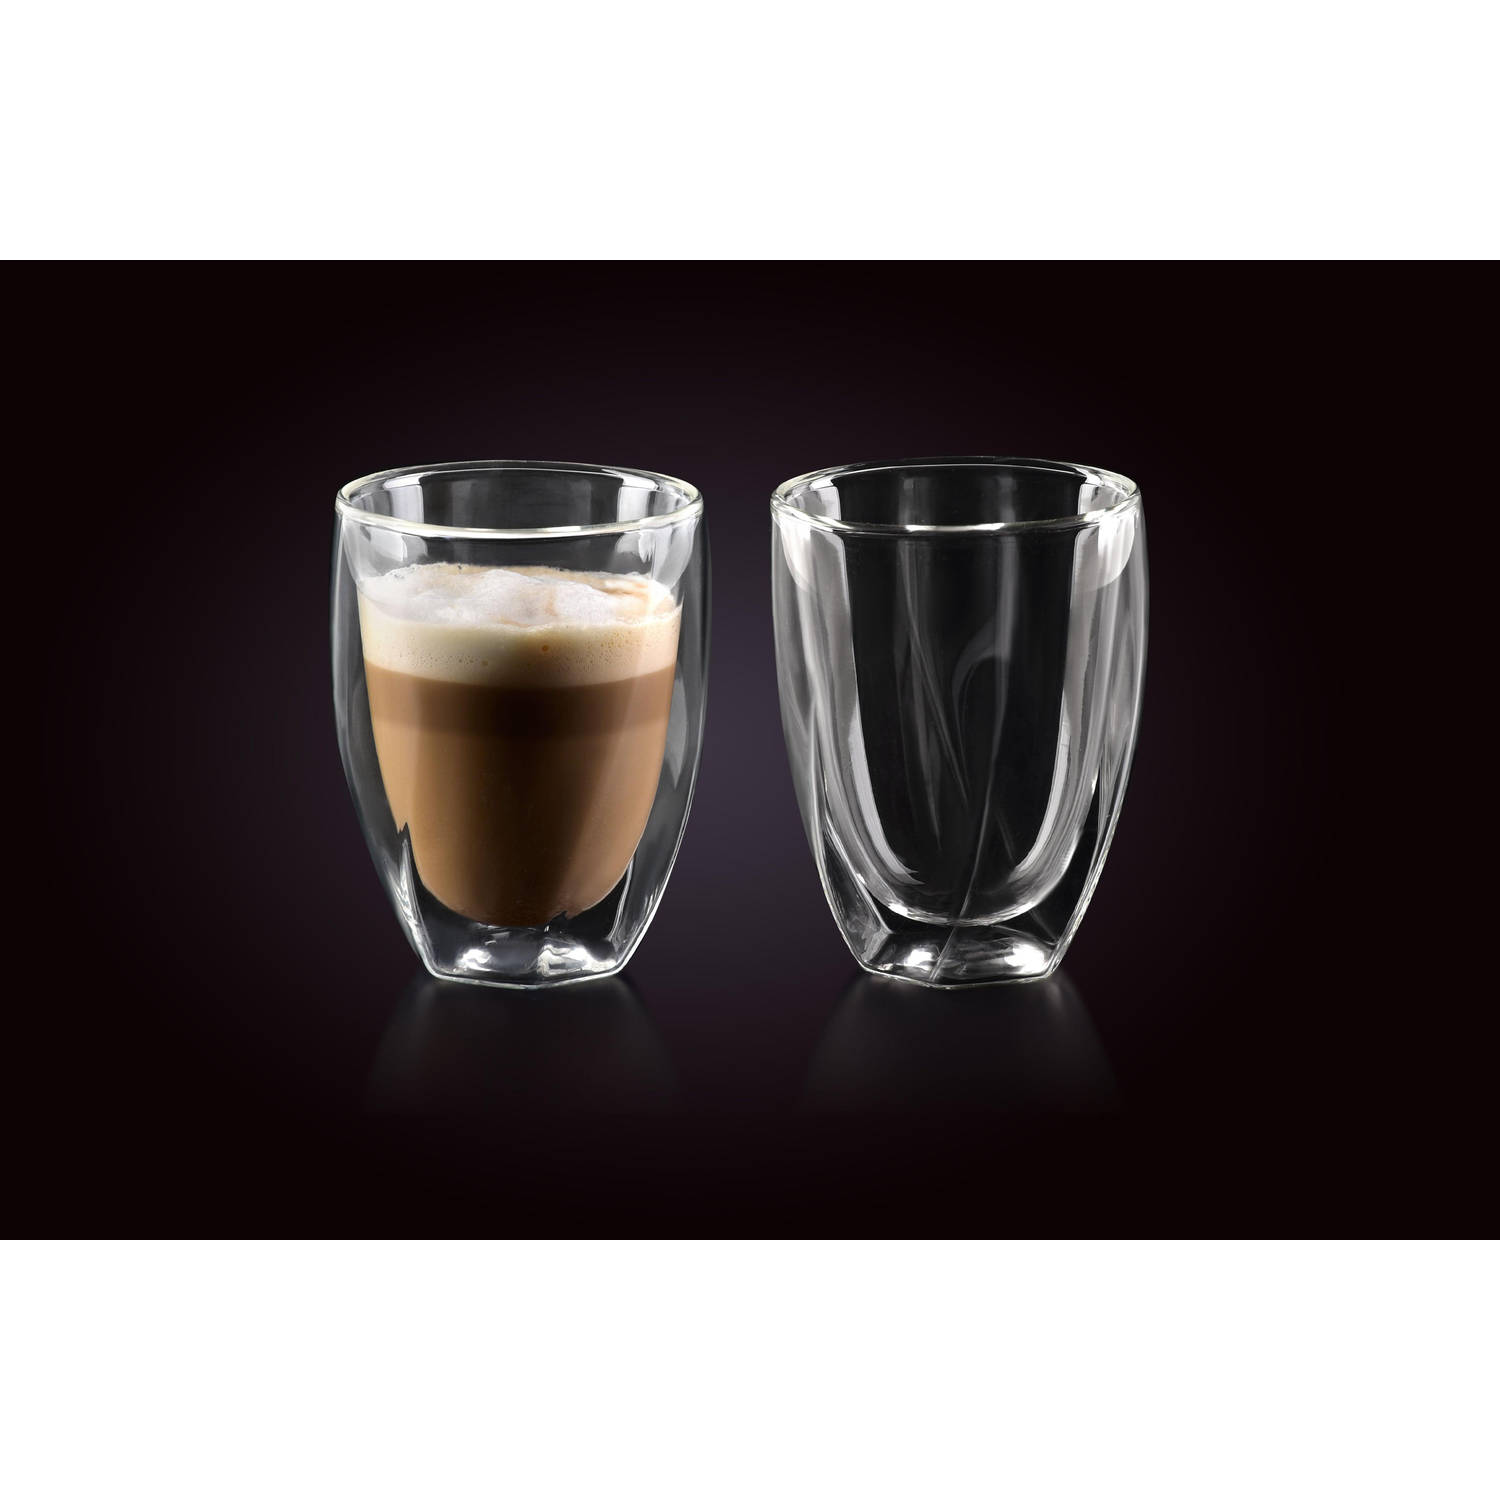 Affekdesign - Dubbelwandige Glazen - 300 ml - Set van 2 - Koffieglazen - Theeglas - Cappuccino Glazen - Latte Macchiato Glazen - Glas